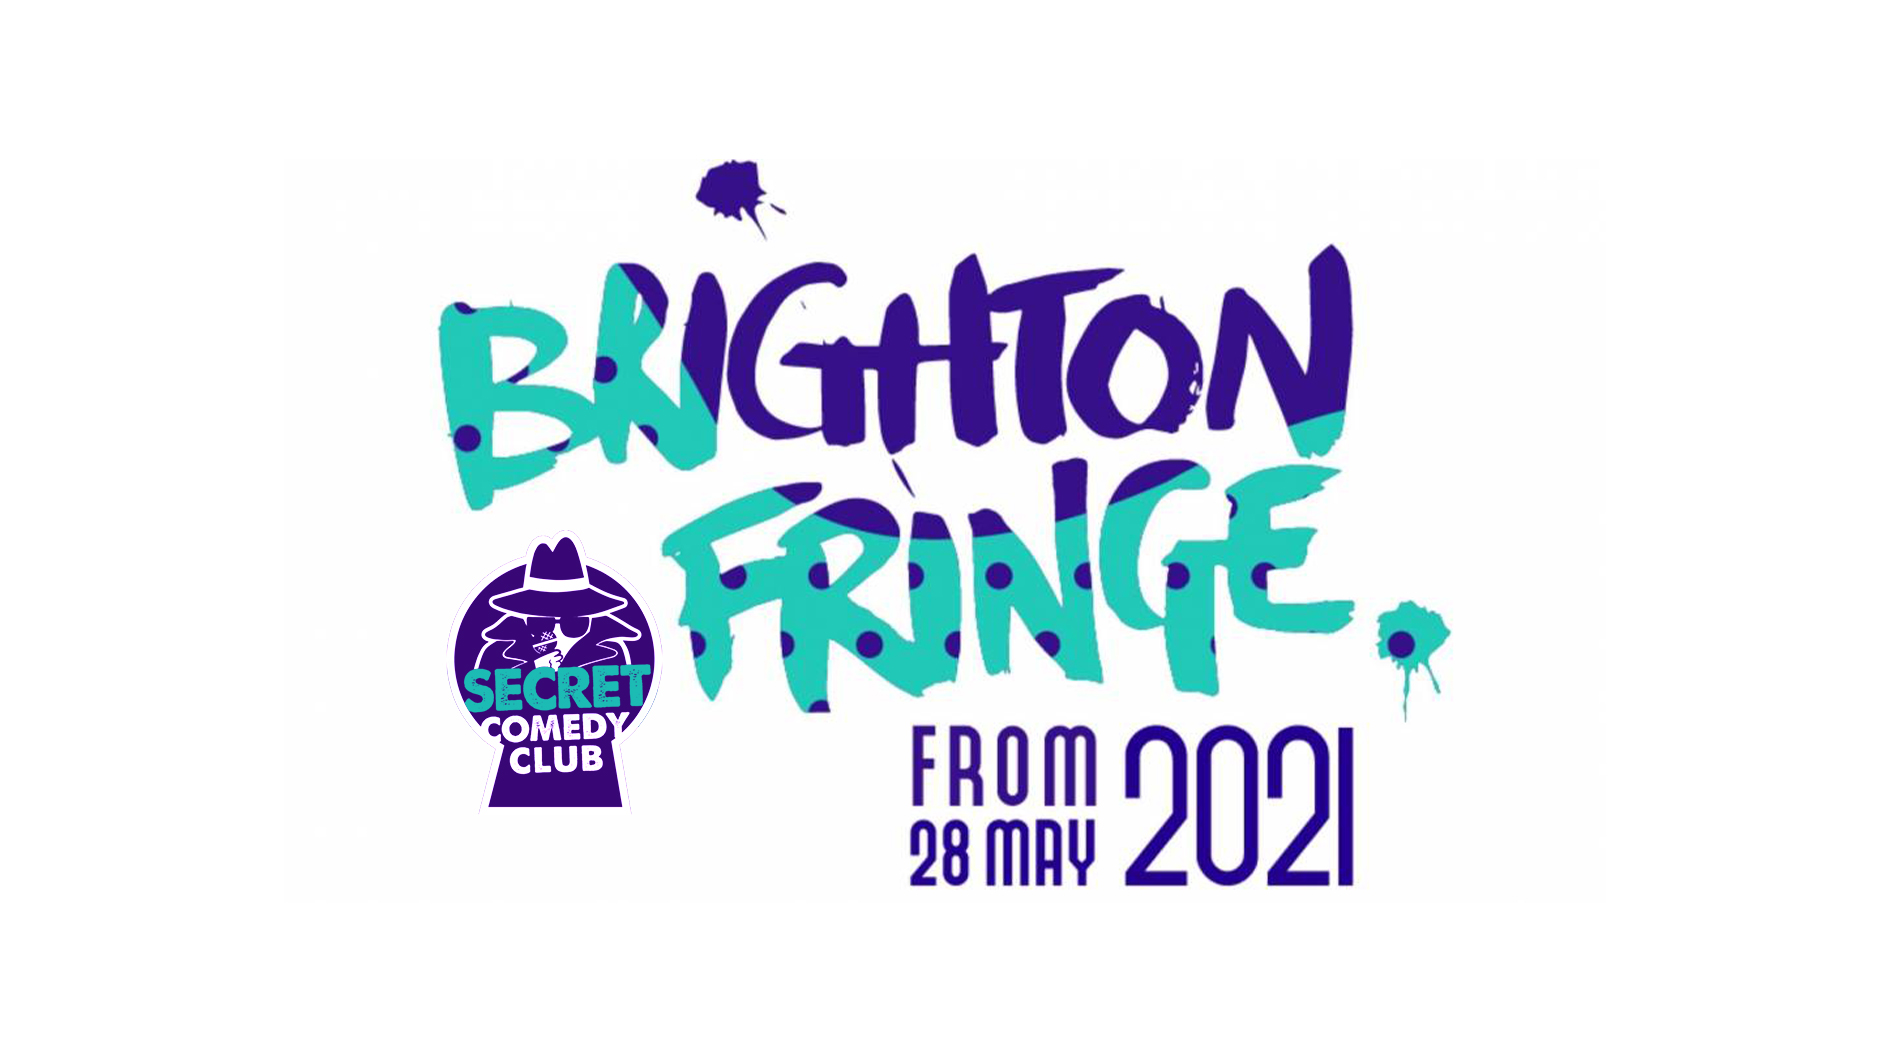 Brighton Fringe Festival 2021 What's On: Artista's Secret Comedy Club